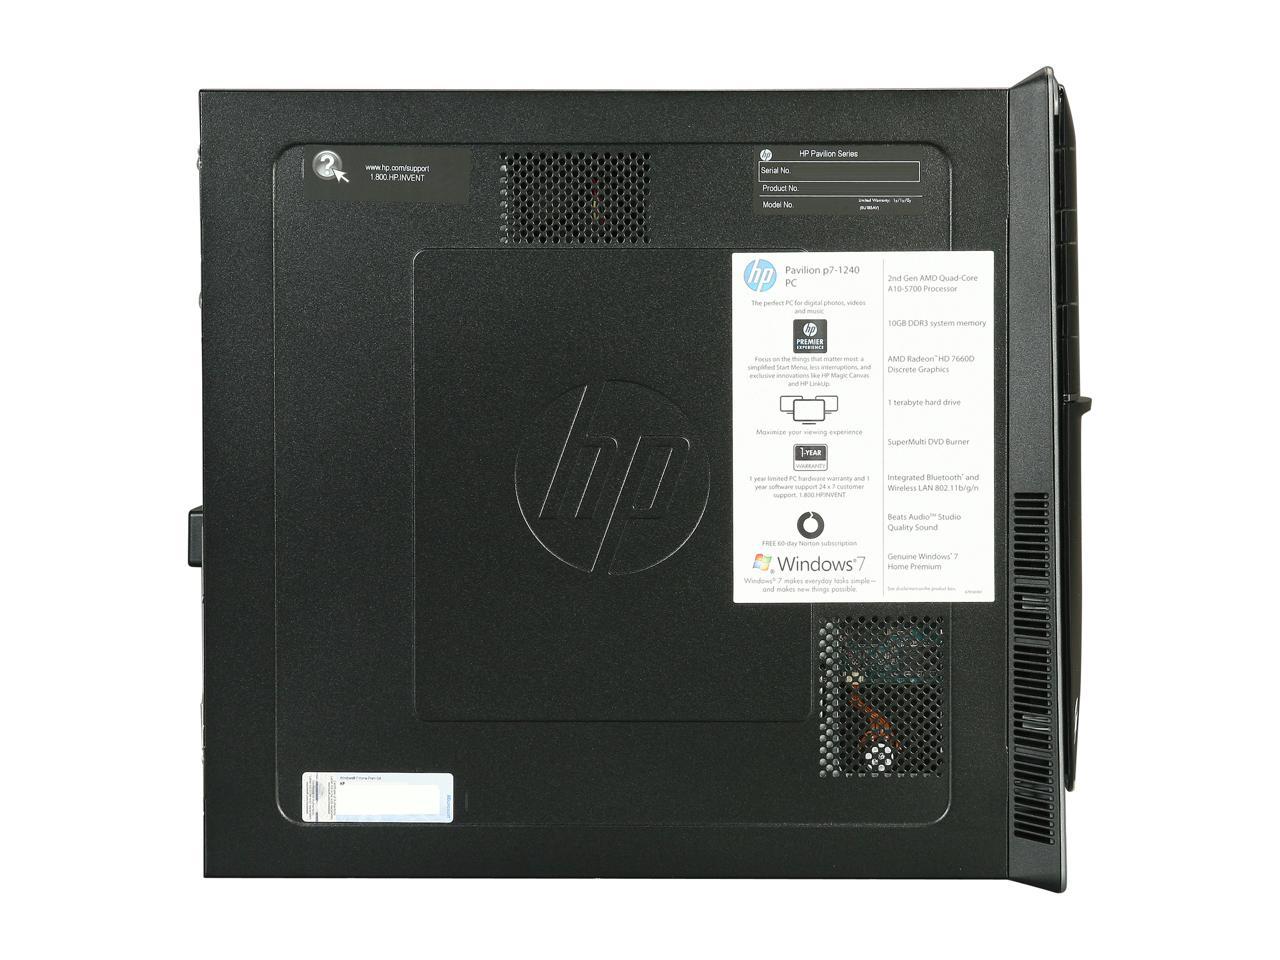 USB 2.0 Wireless WiFi Lan Card for HP-Compaq Pavilion p7-1240